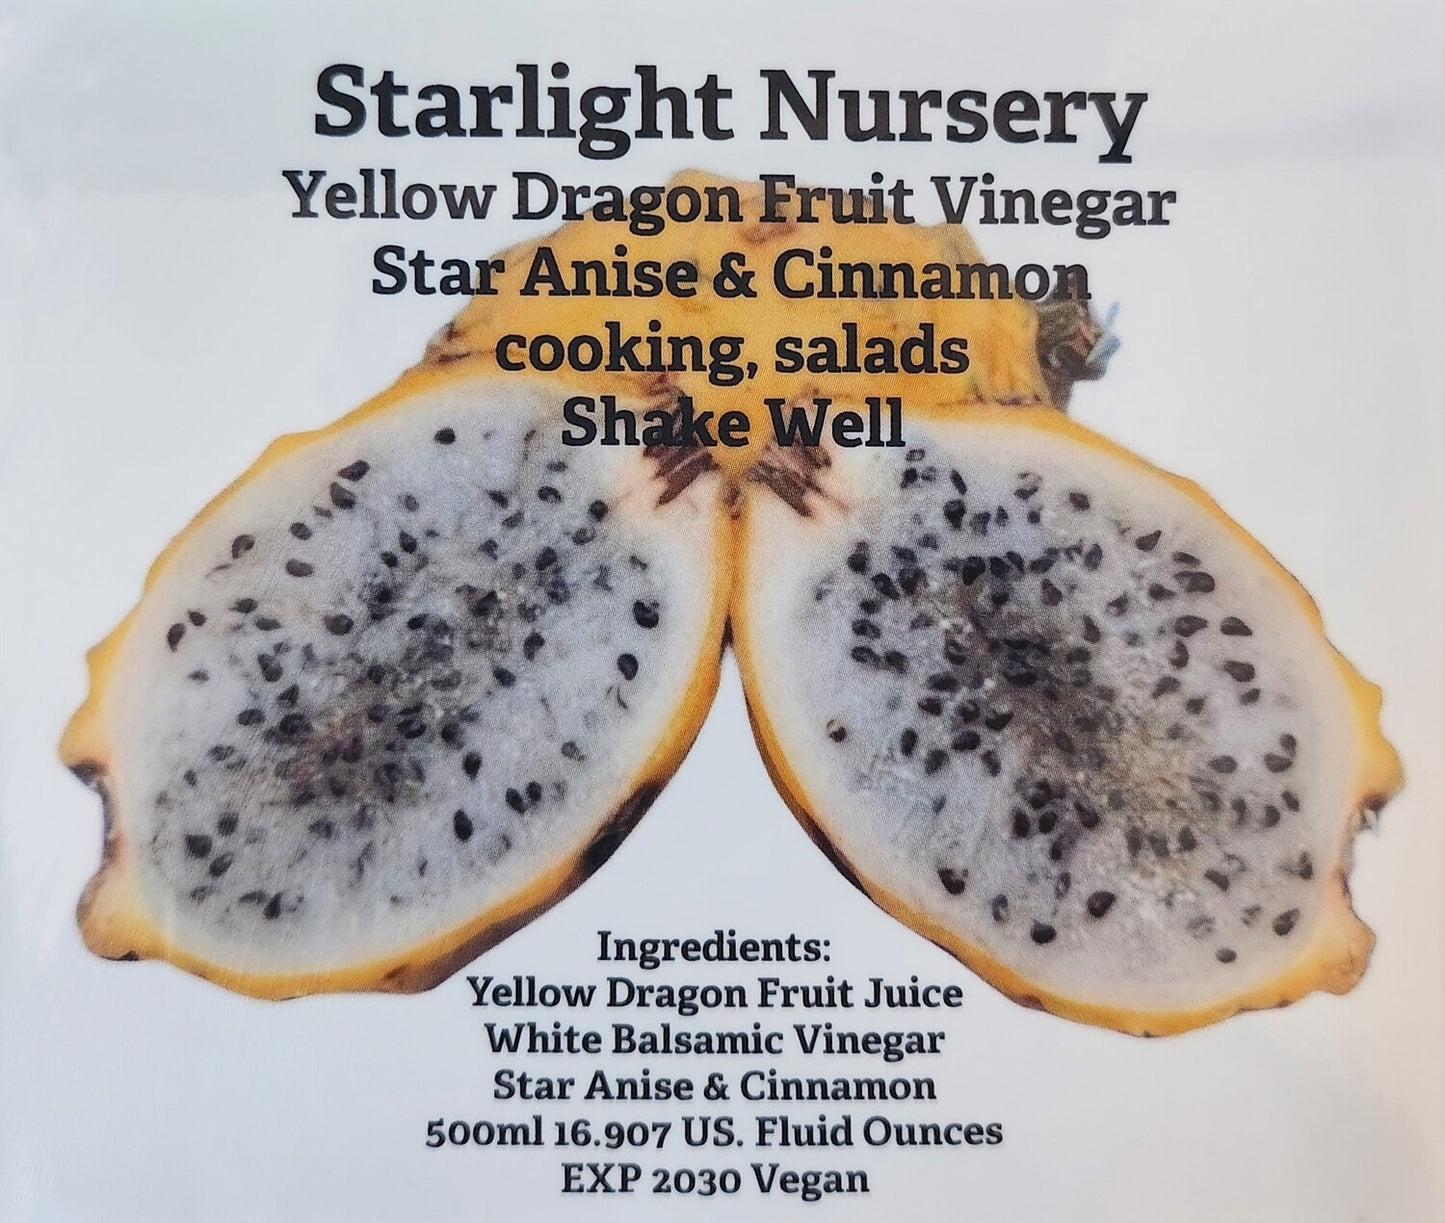 Yellow Dragon Fruit Vinegar Cinnamon, Star Anise - Starlight Nursery 